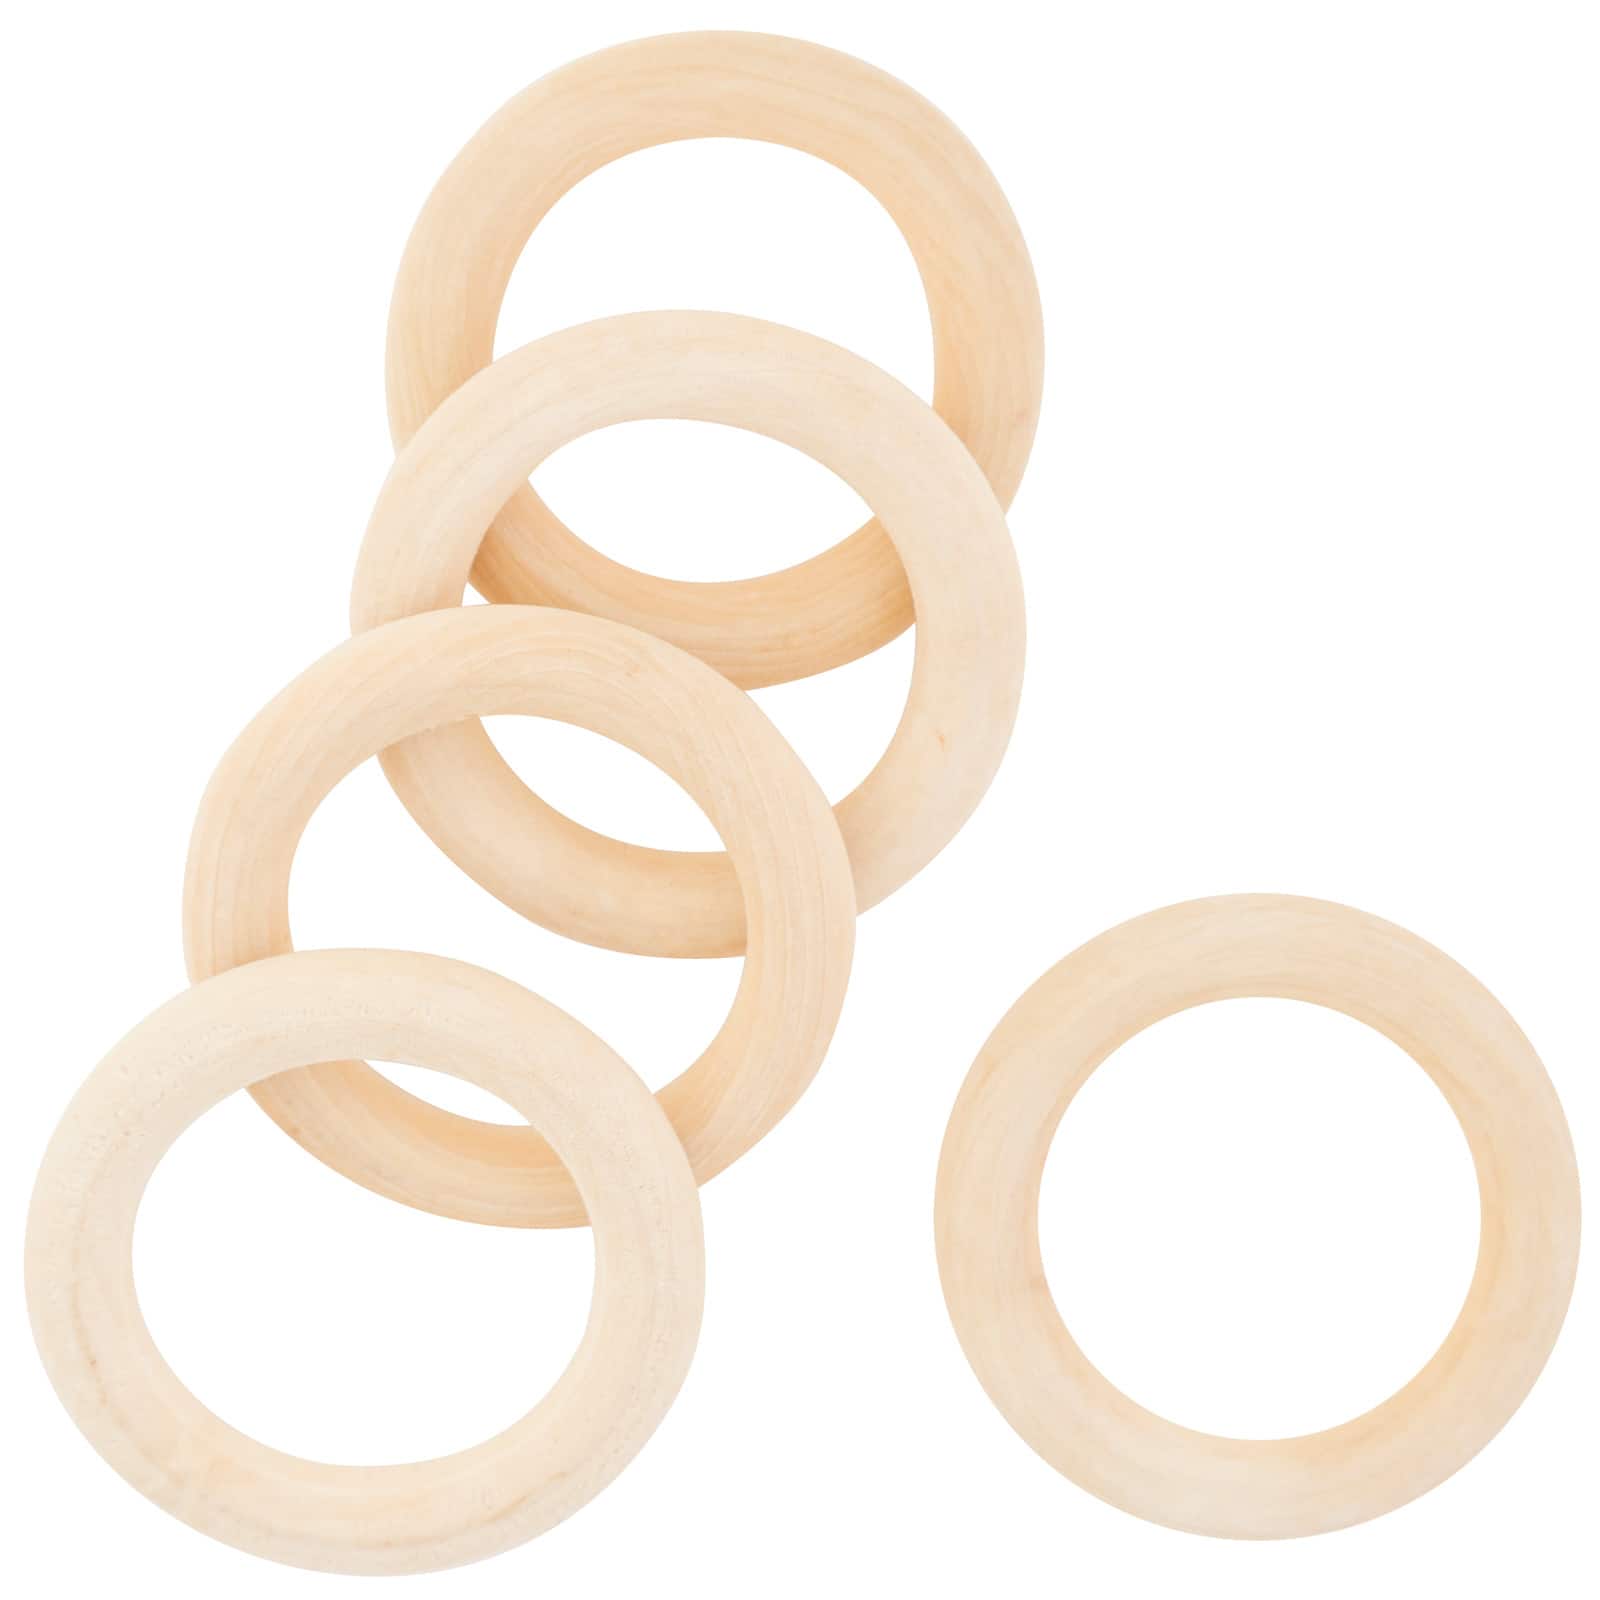 Loops & Threads Wood Cabone Rings - 5 ct